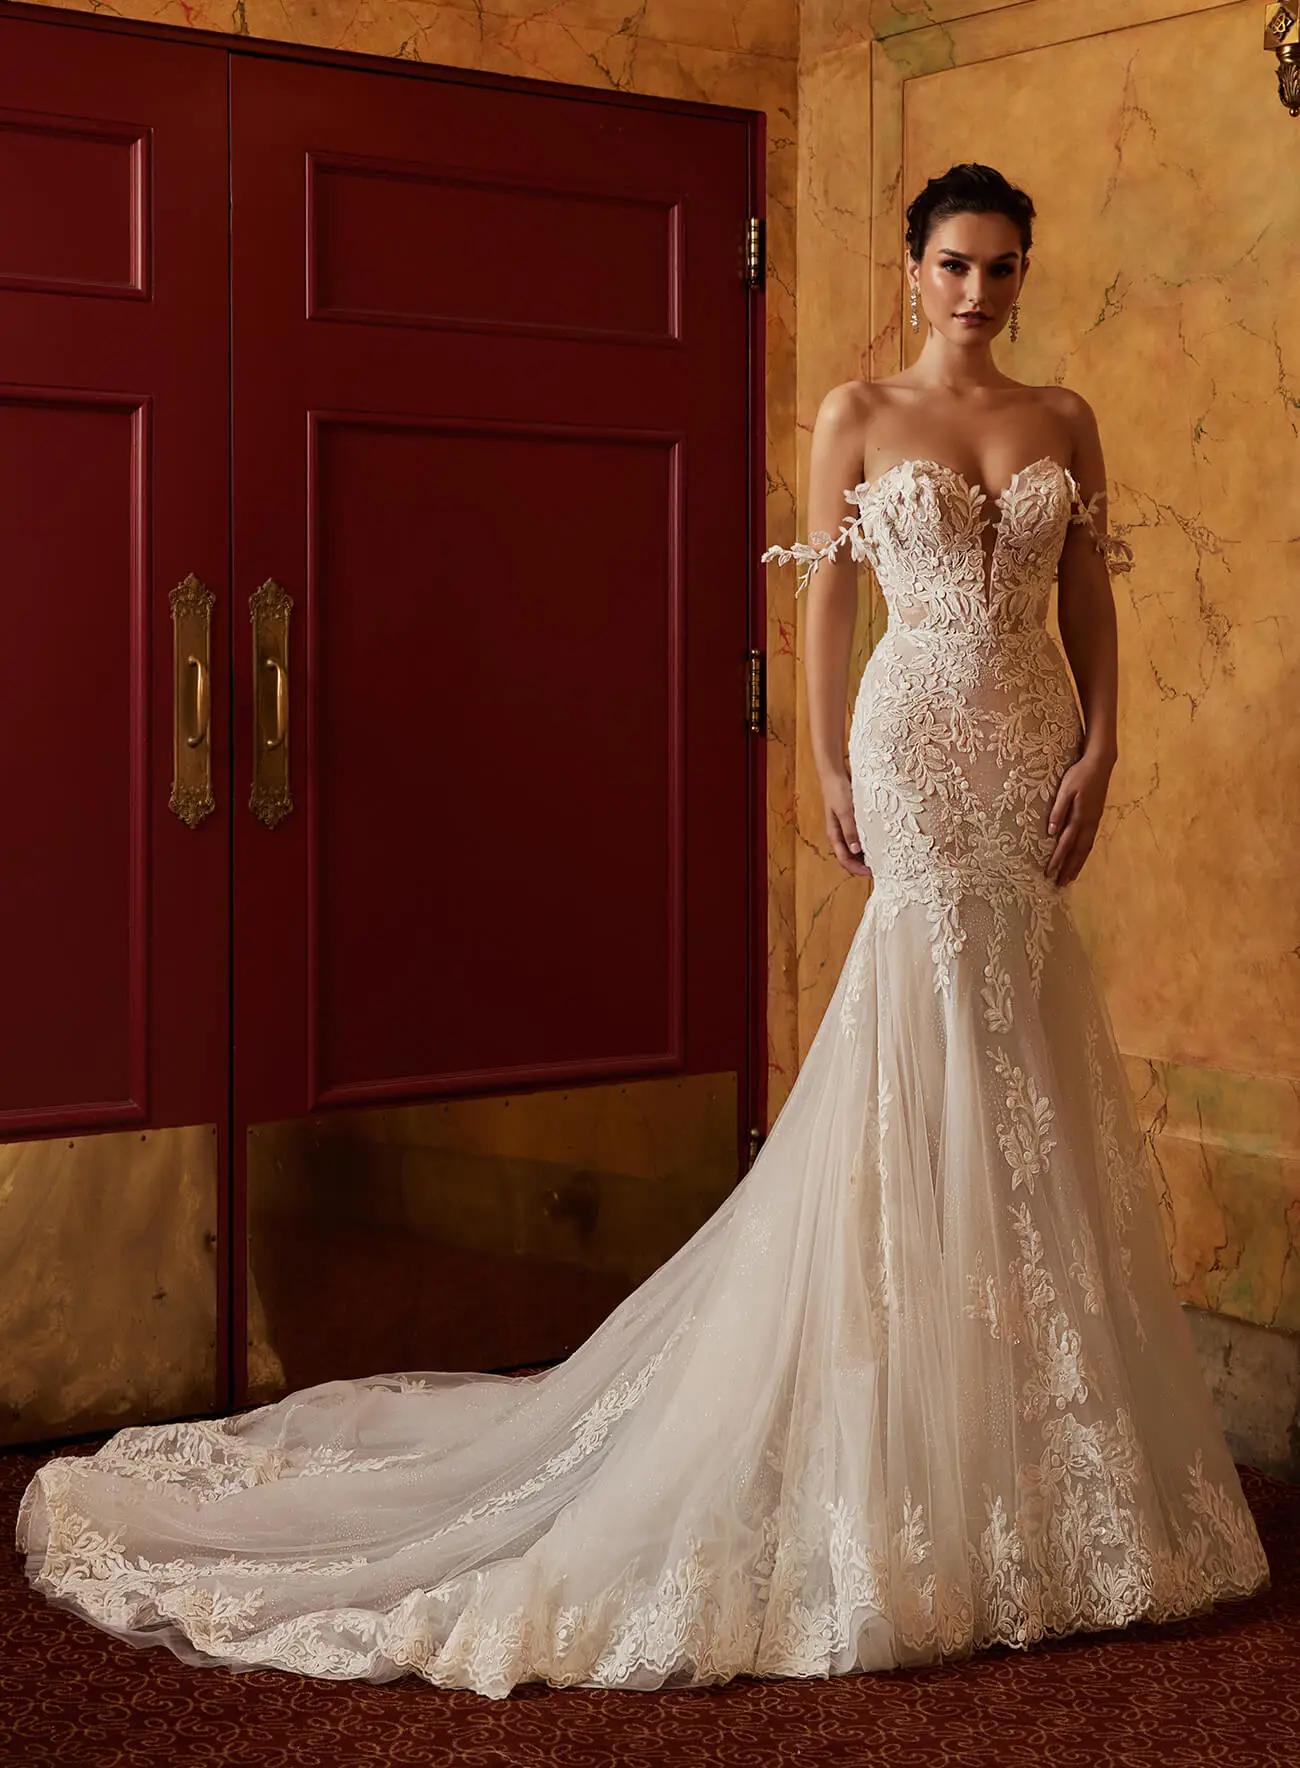 Model wearing Marcella by Calla Blanche wedding dress